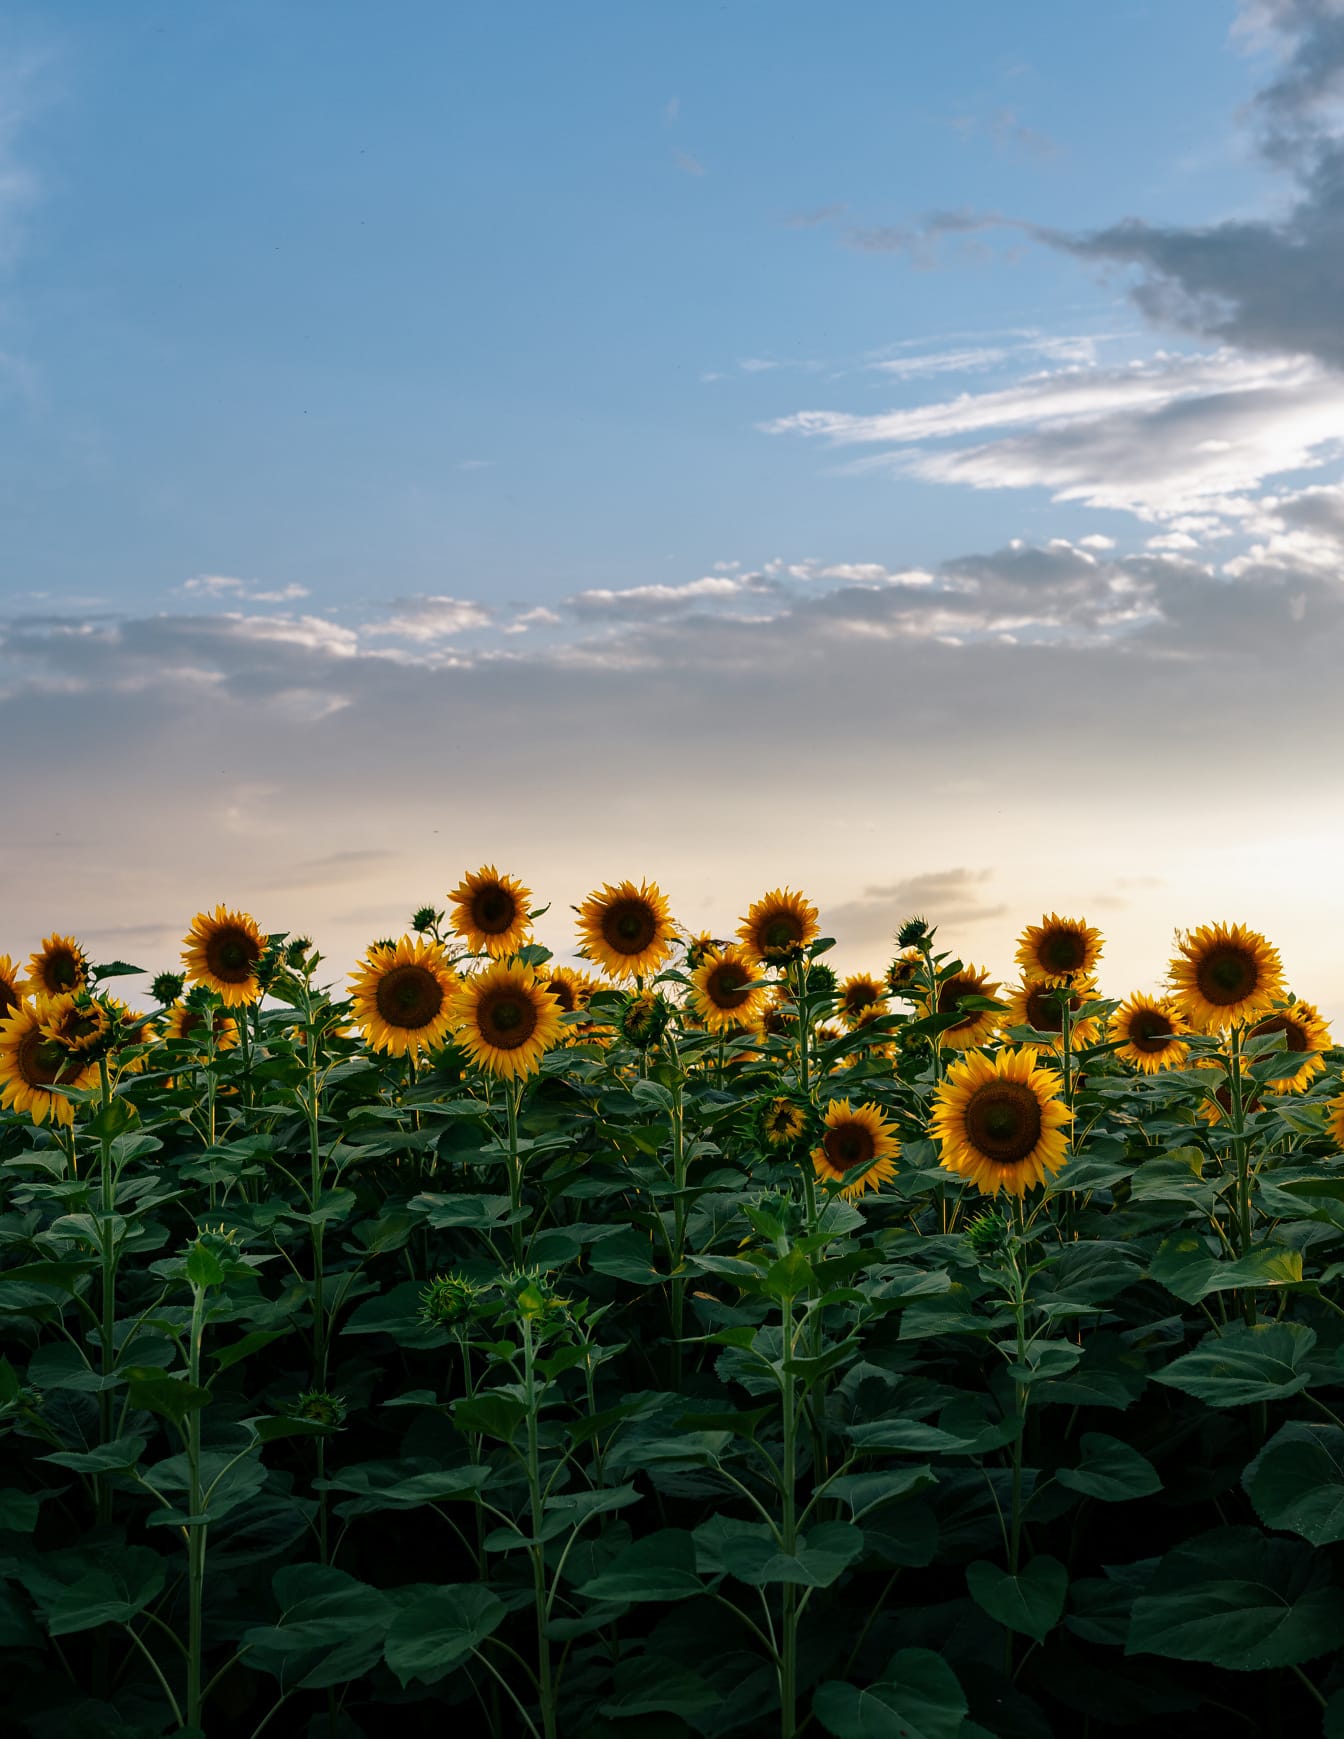 Ladang datar pertanian bunga matahari di pedesaan